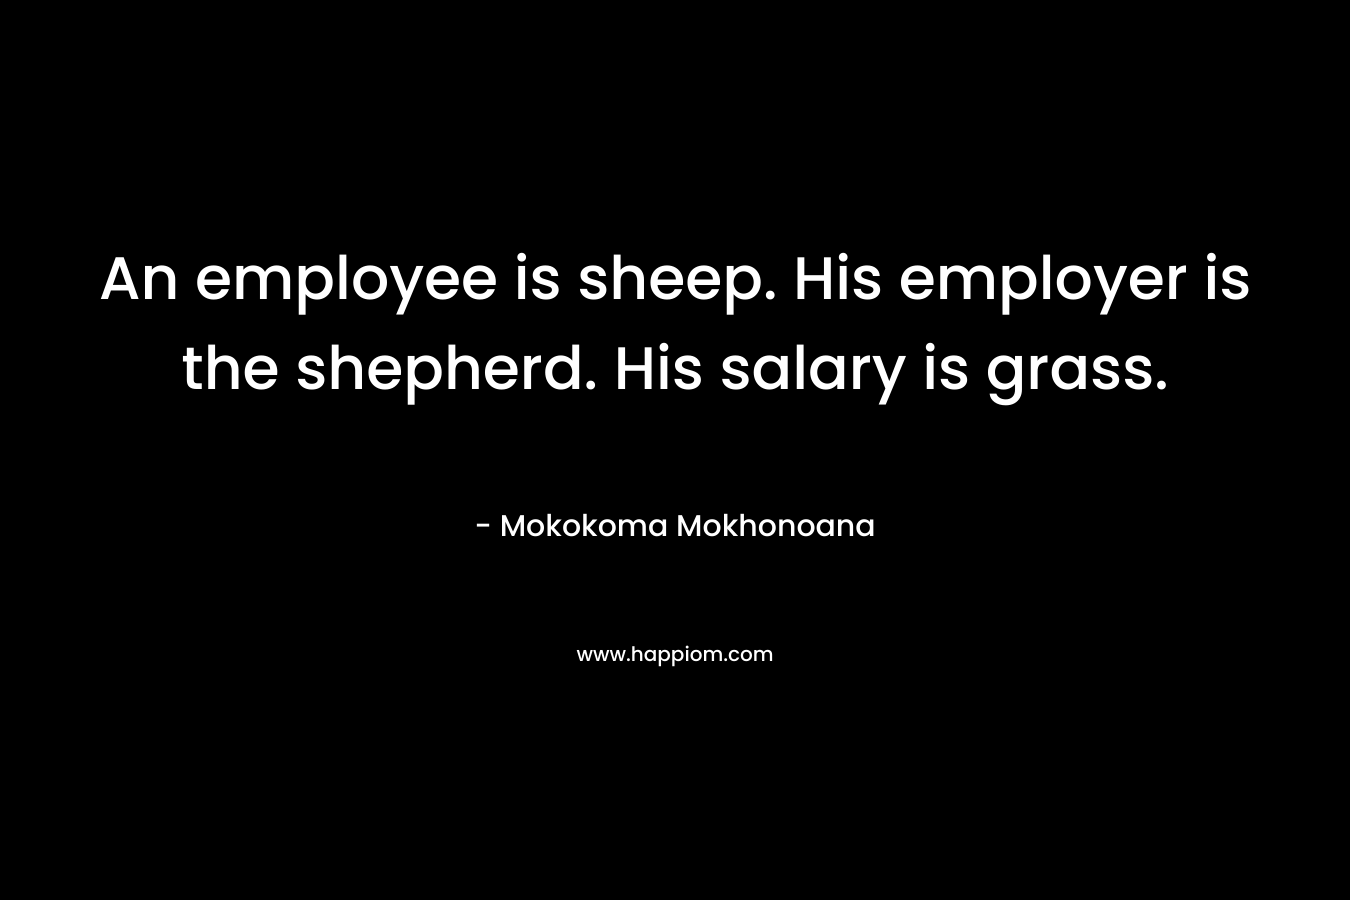 An employee is sheep. His employer is the shepherd. His salary is grass. – Mokokoma Mokhonoana